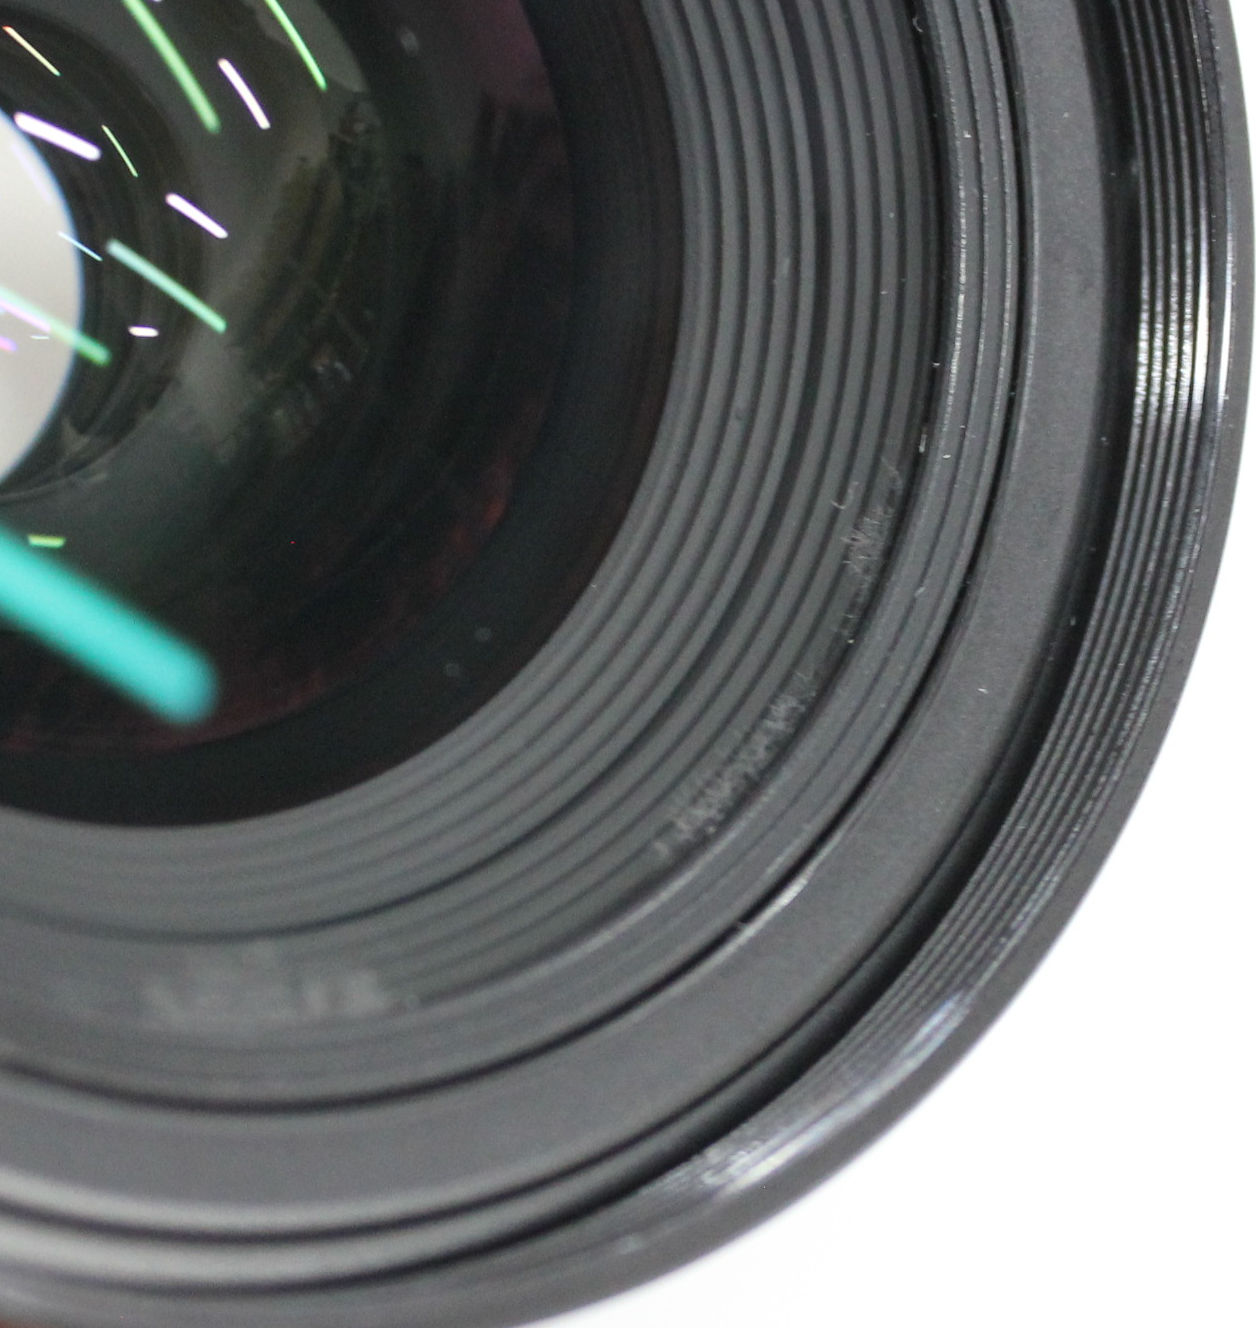  Pentax SMC Pentax-A 645 45mm F/2.8 MF Lens from Japan Photo 9